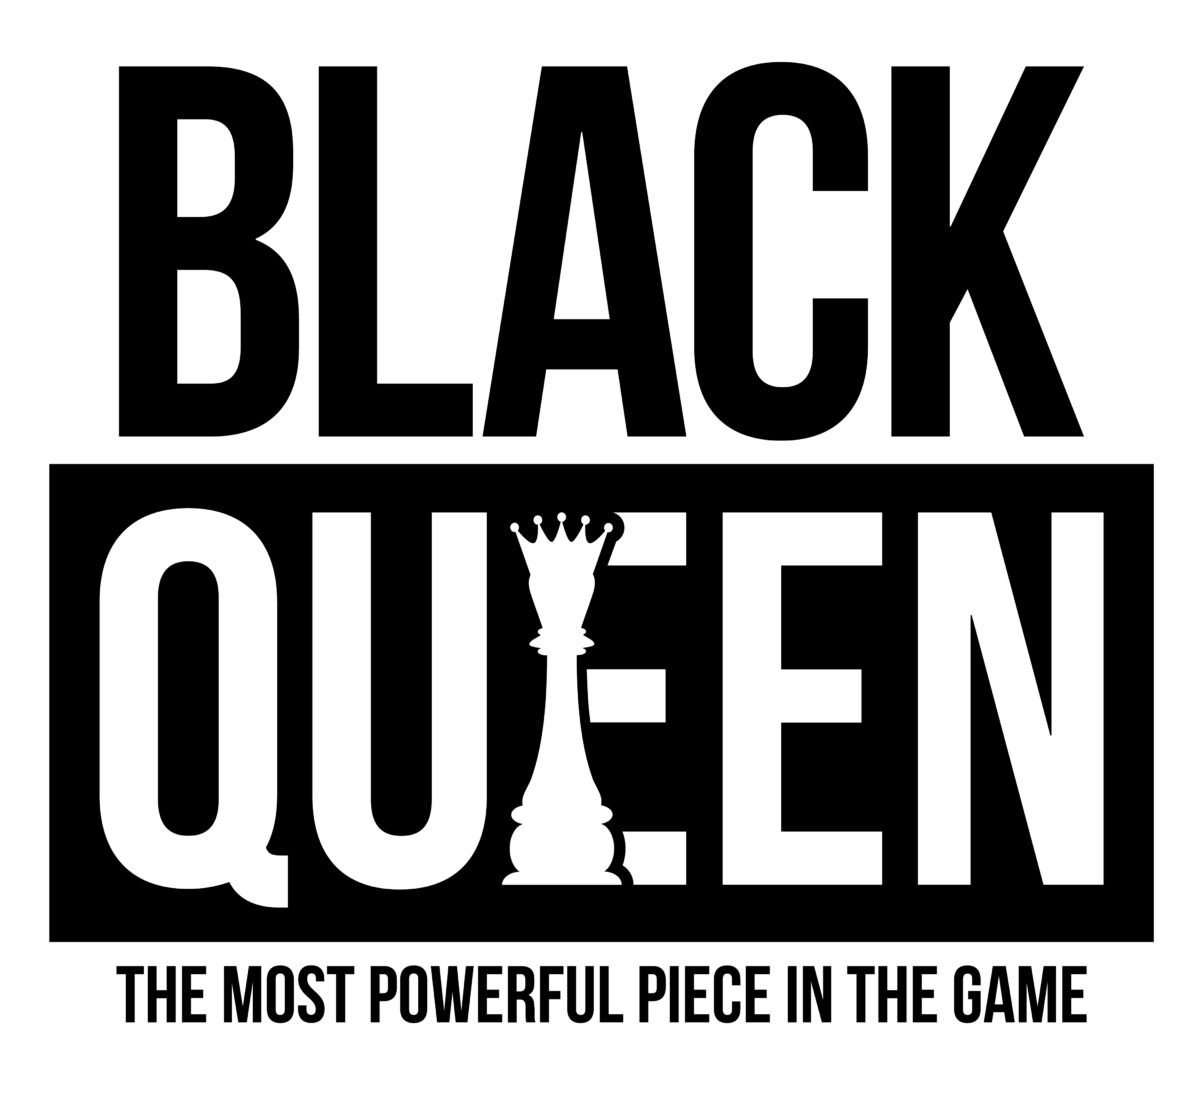 Black queen chess Svg